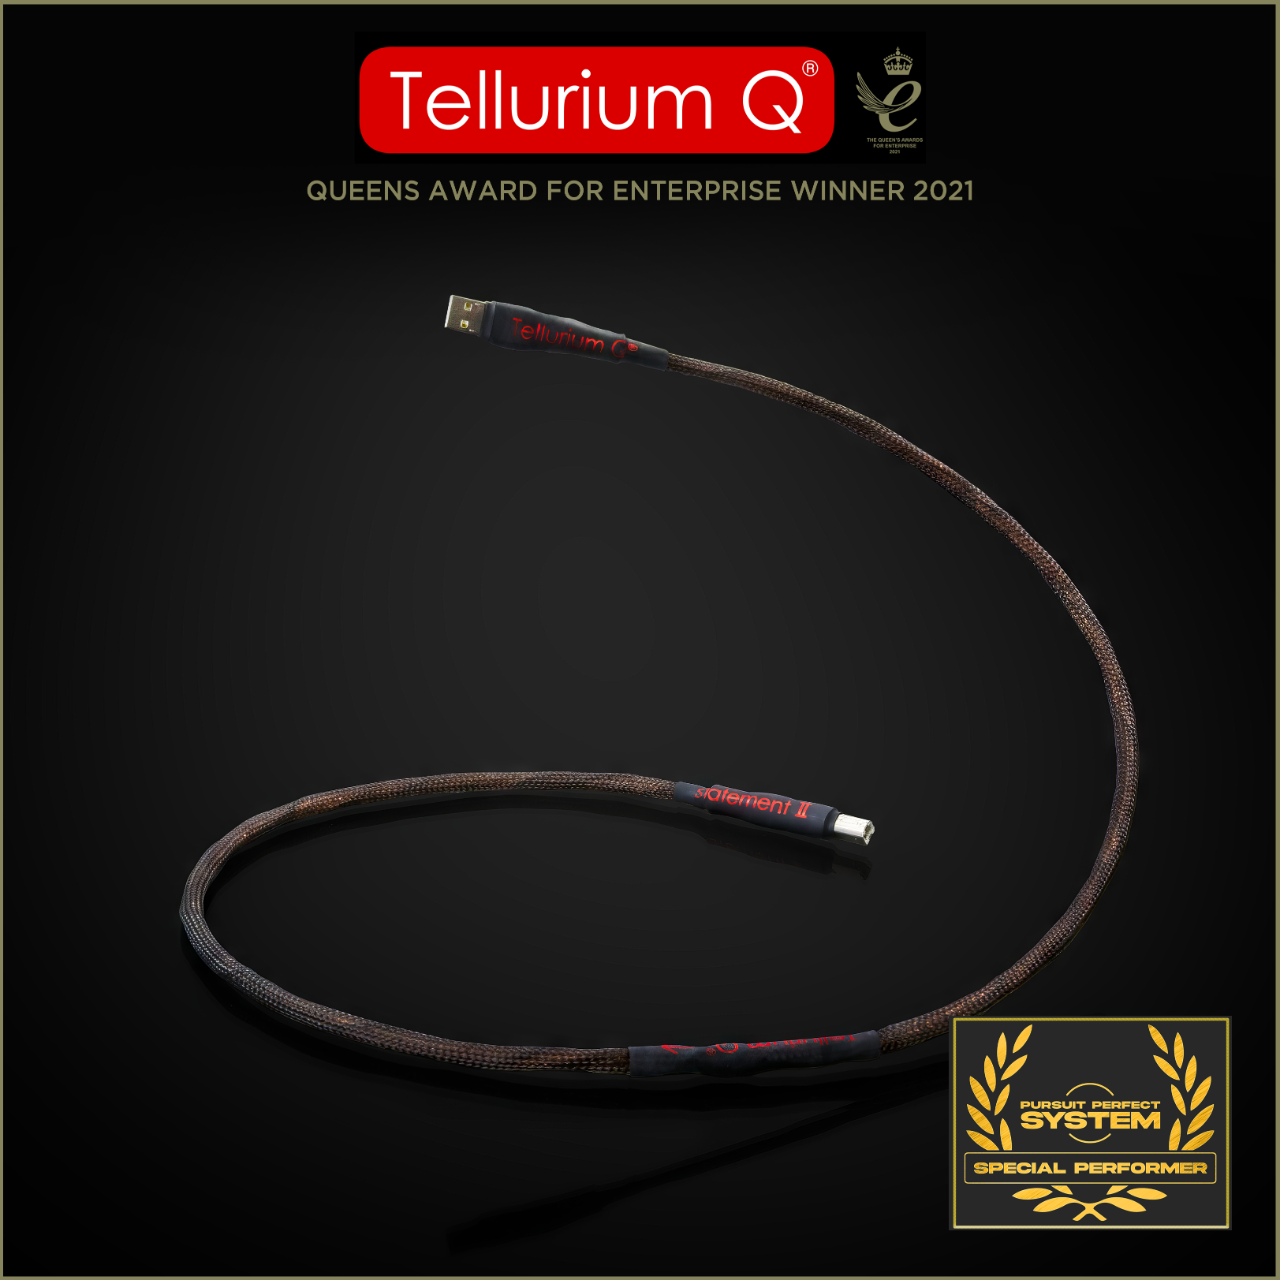 Tellurium Q - Statement II USB - Test von Pursuit Perfect System